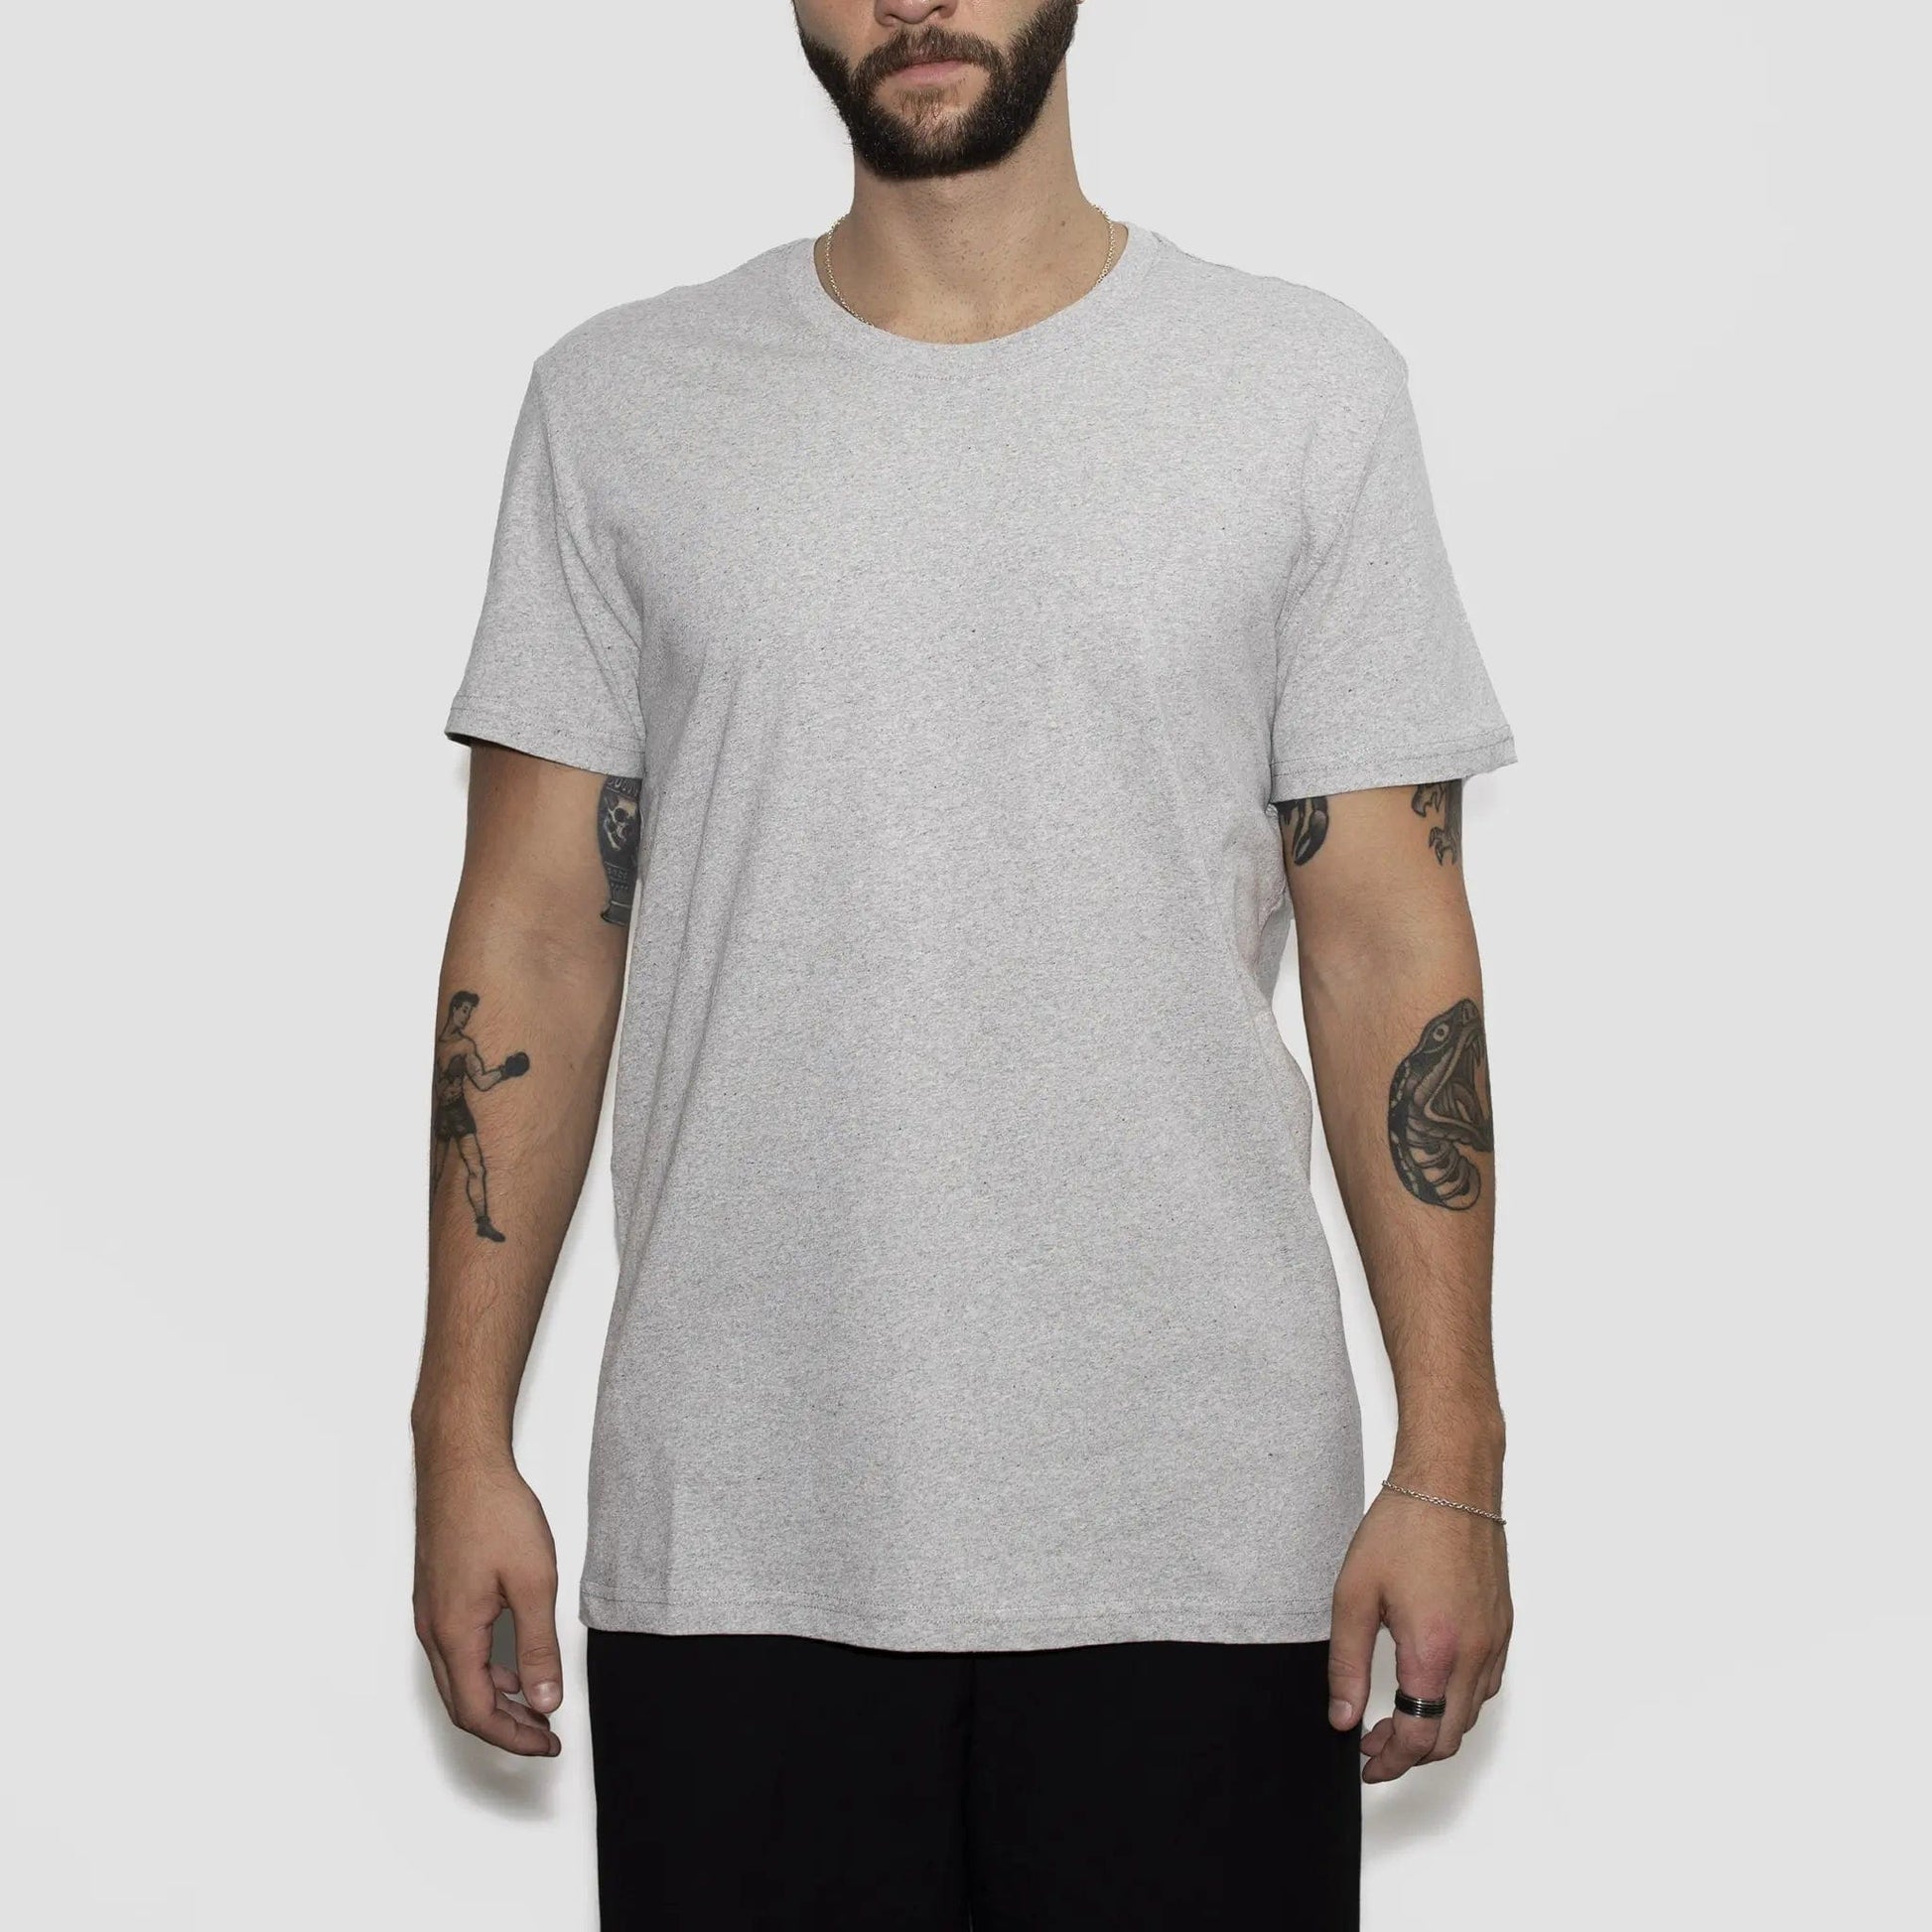 3-Pack Heather Grey T-Shirts for Men, 100% Circular